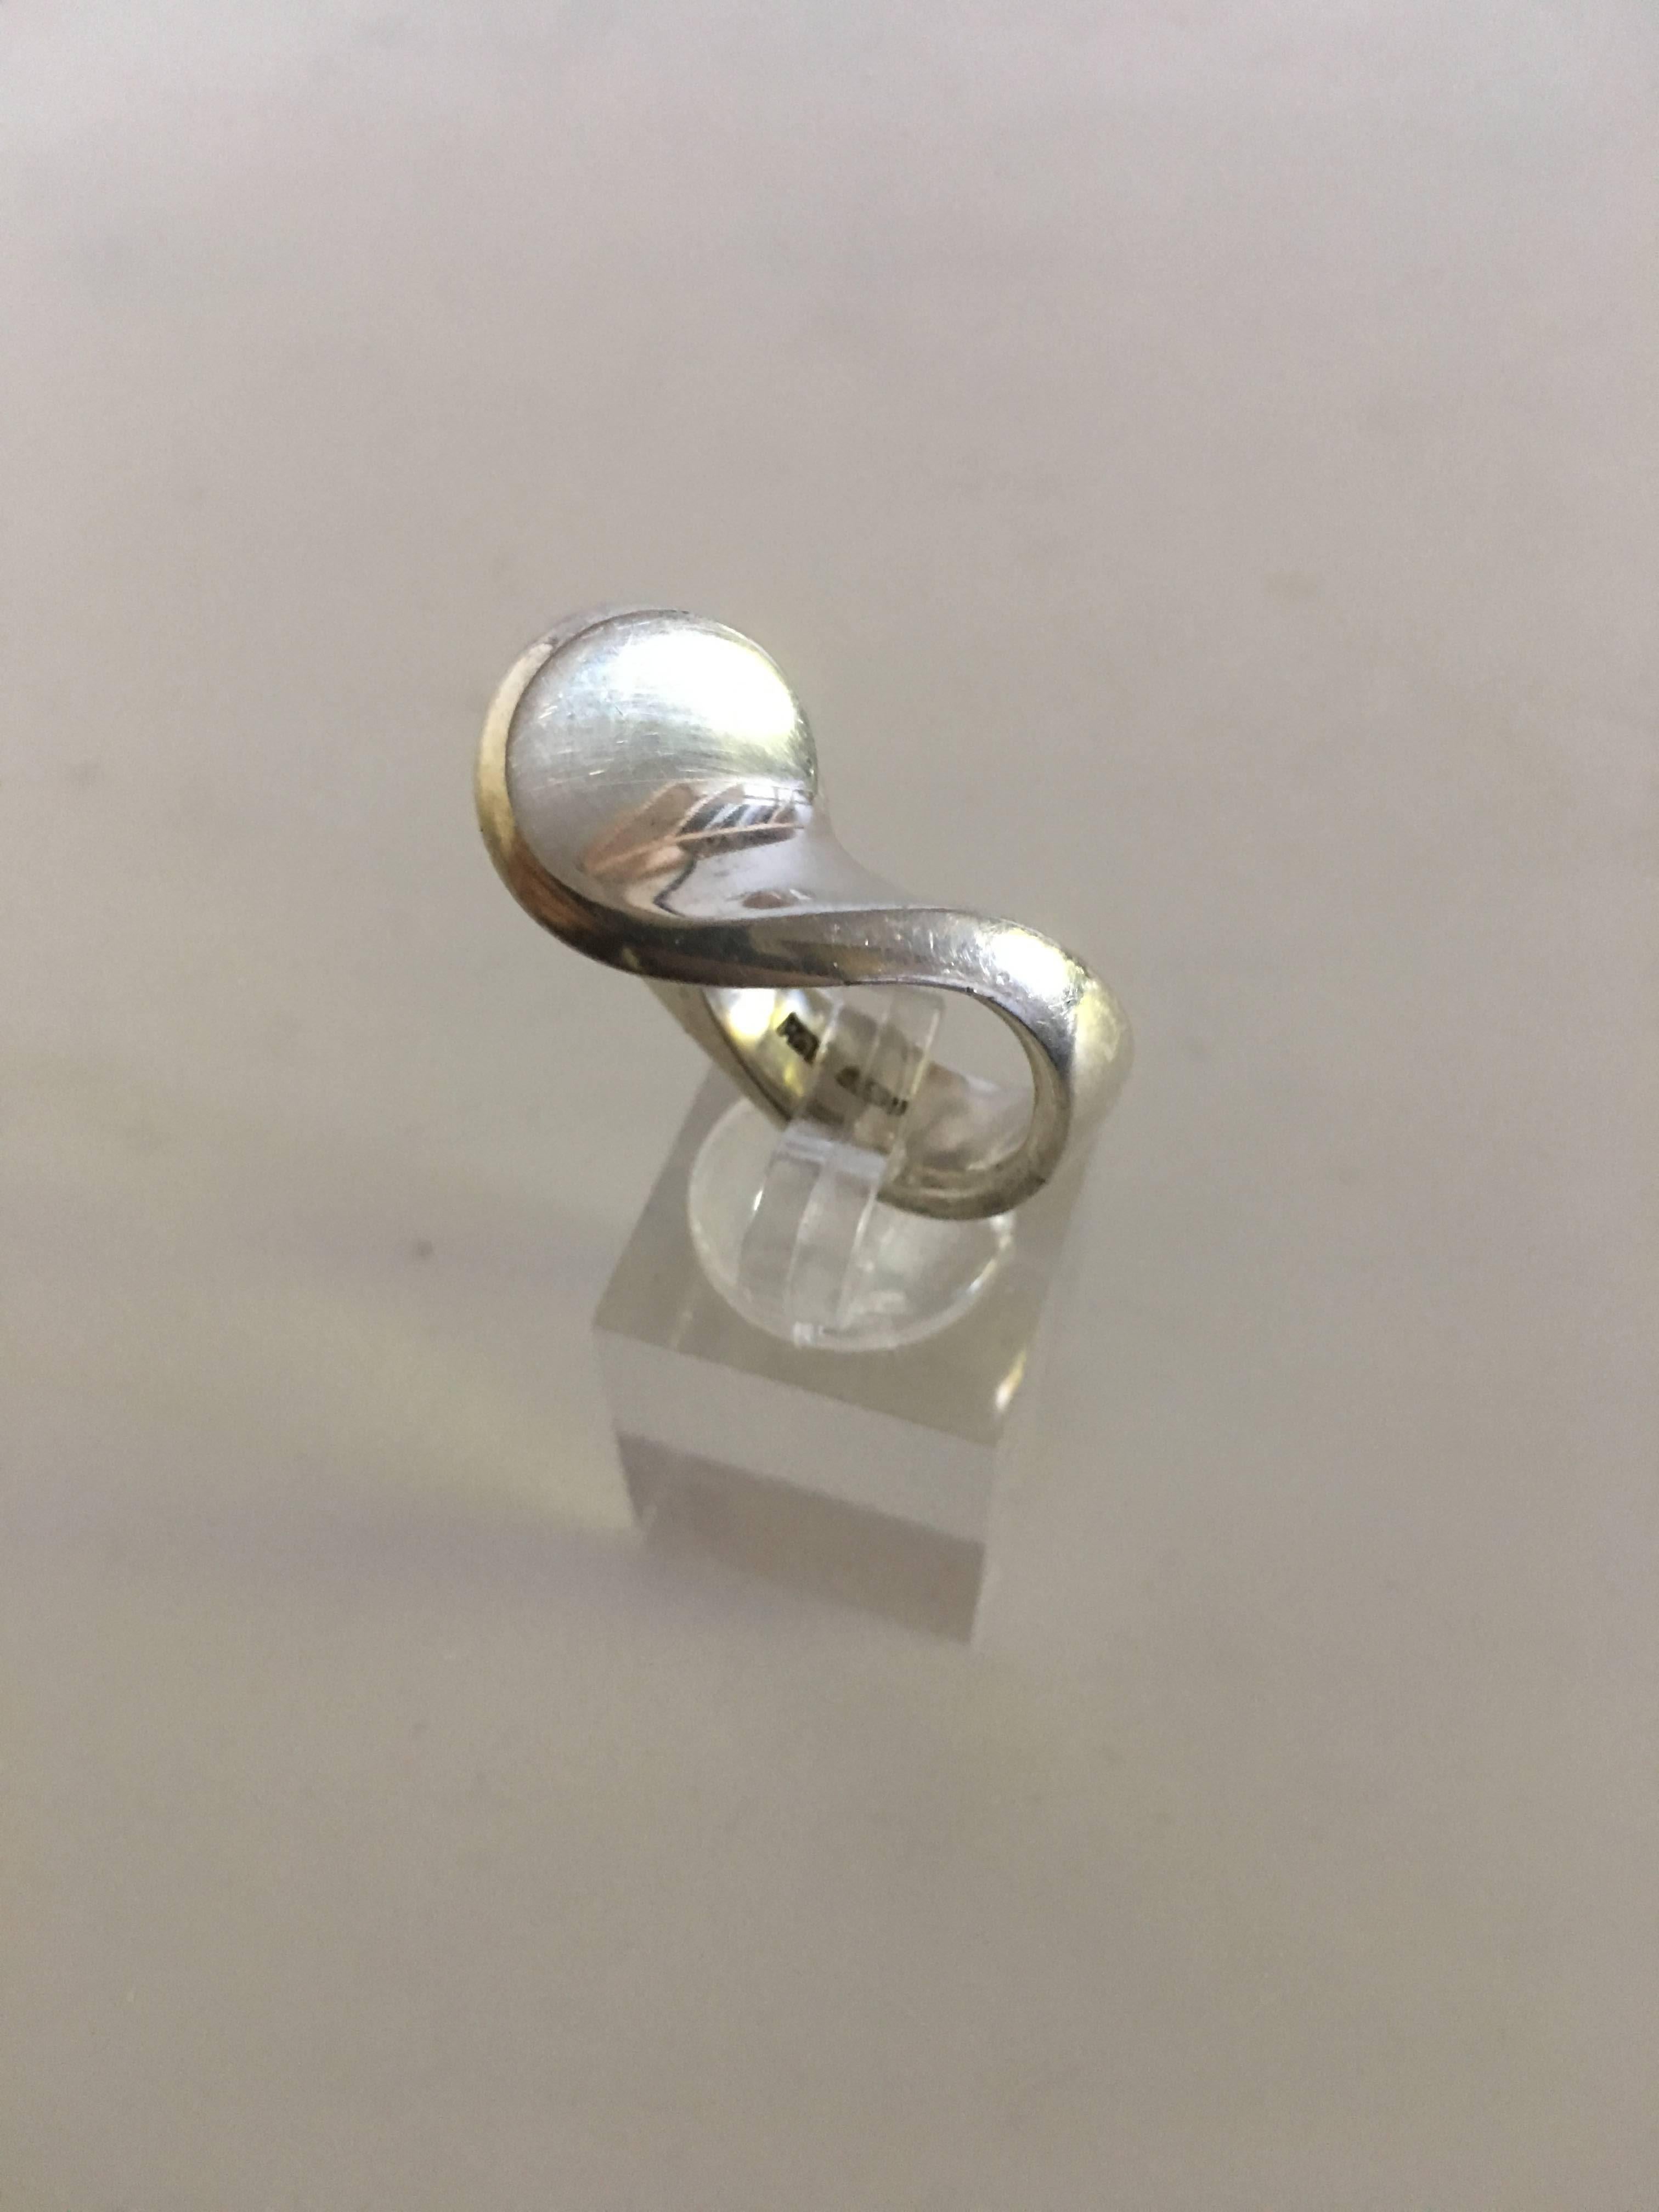 Hans Hansen Sterling Silver Ring In New Condition For Sale In Copenhagen, DK